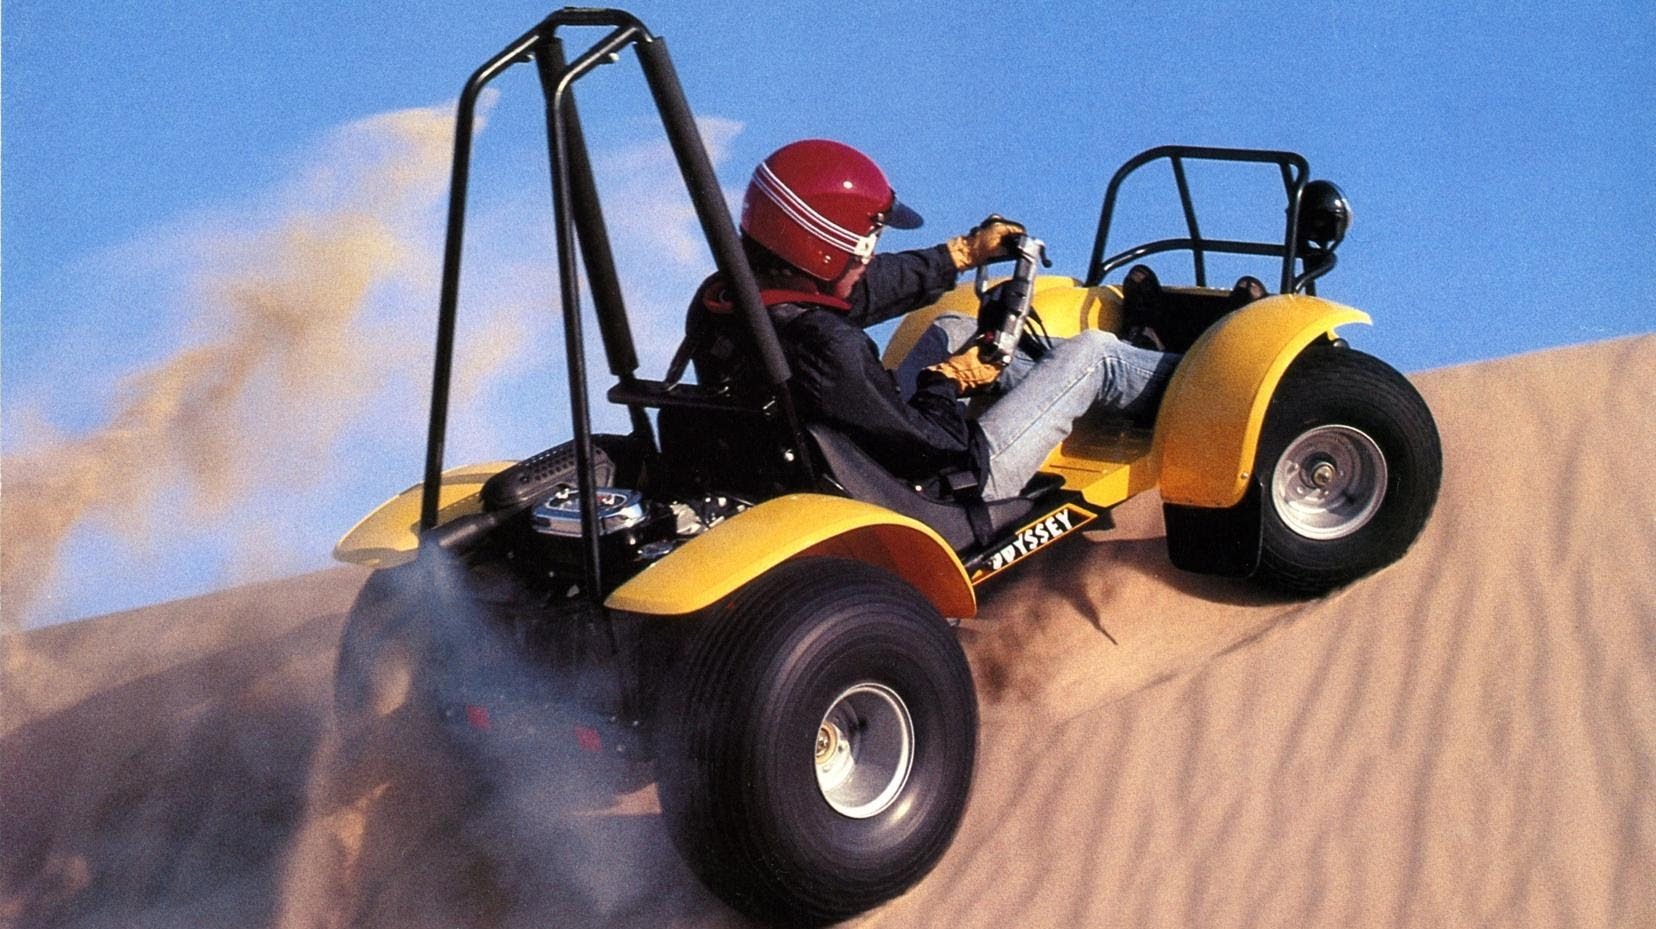 1980 honda odyssey dune buggy